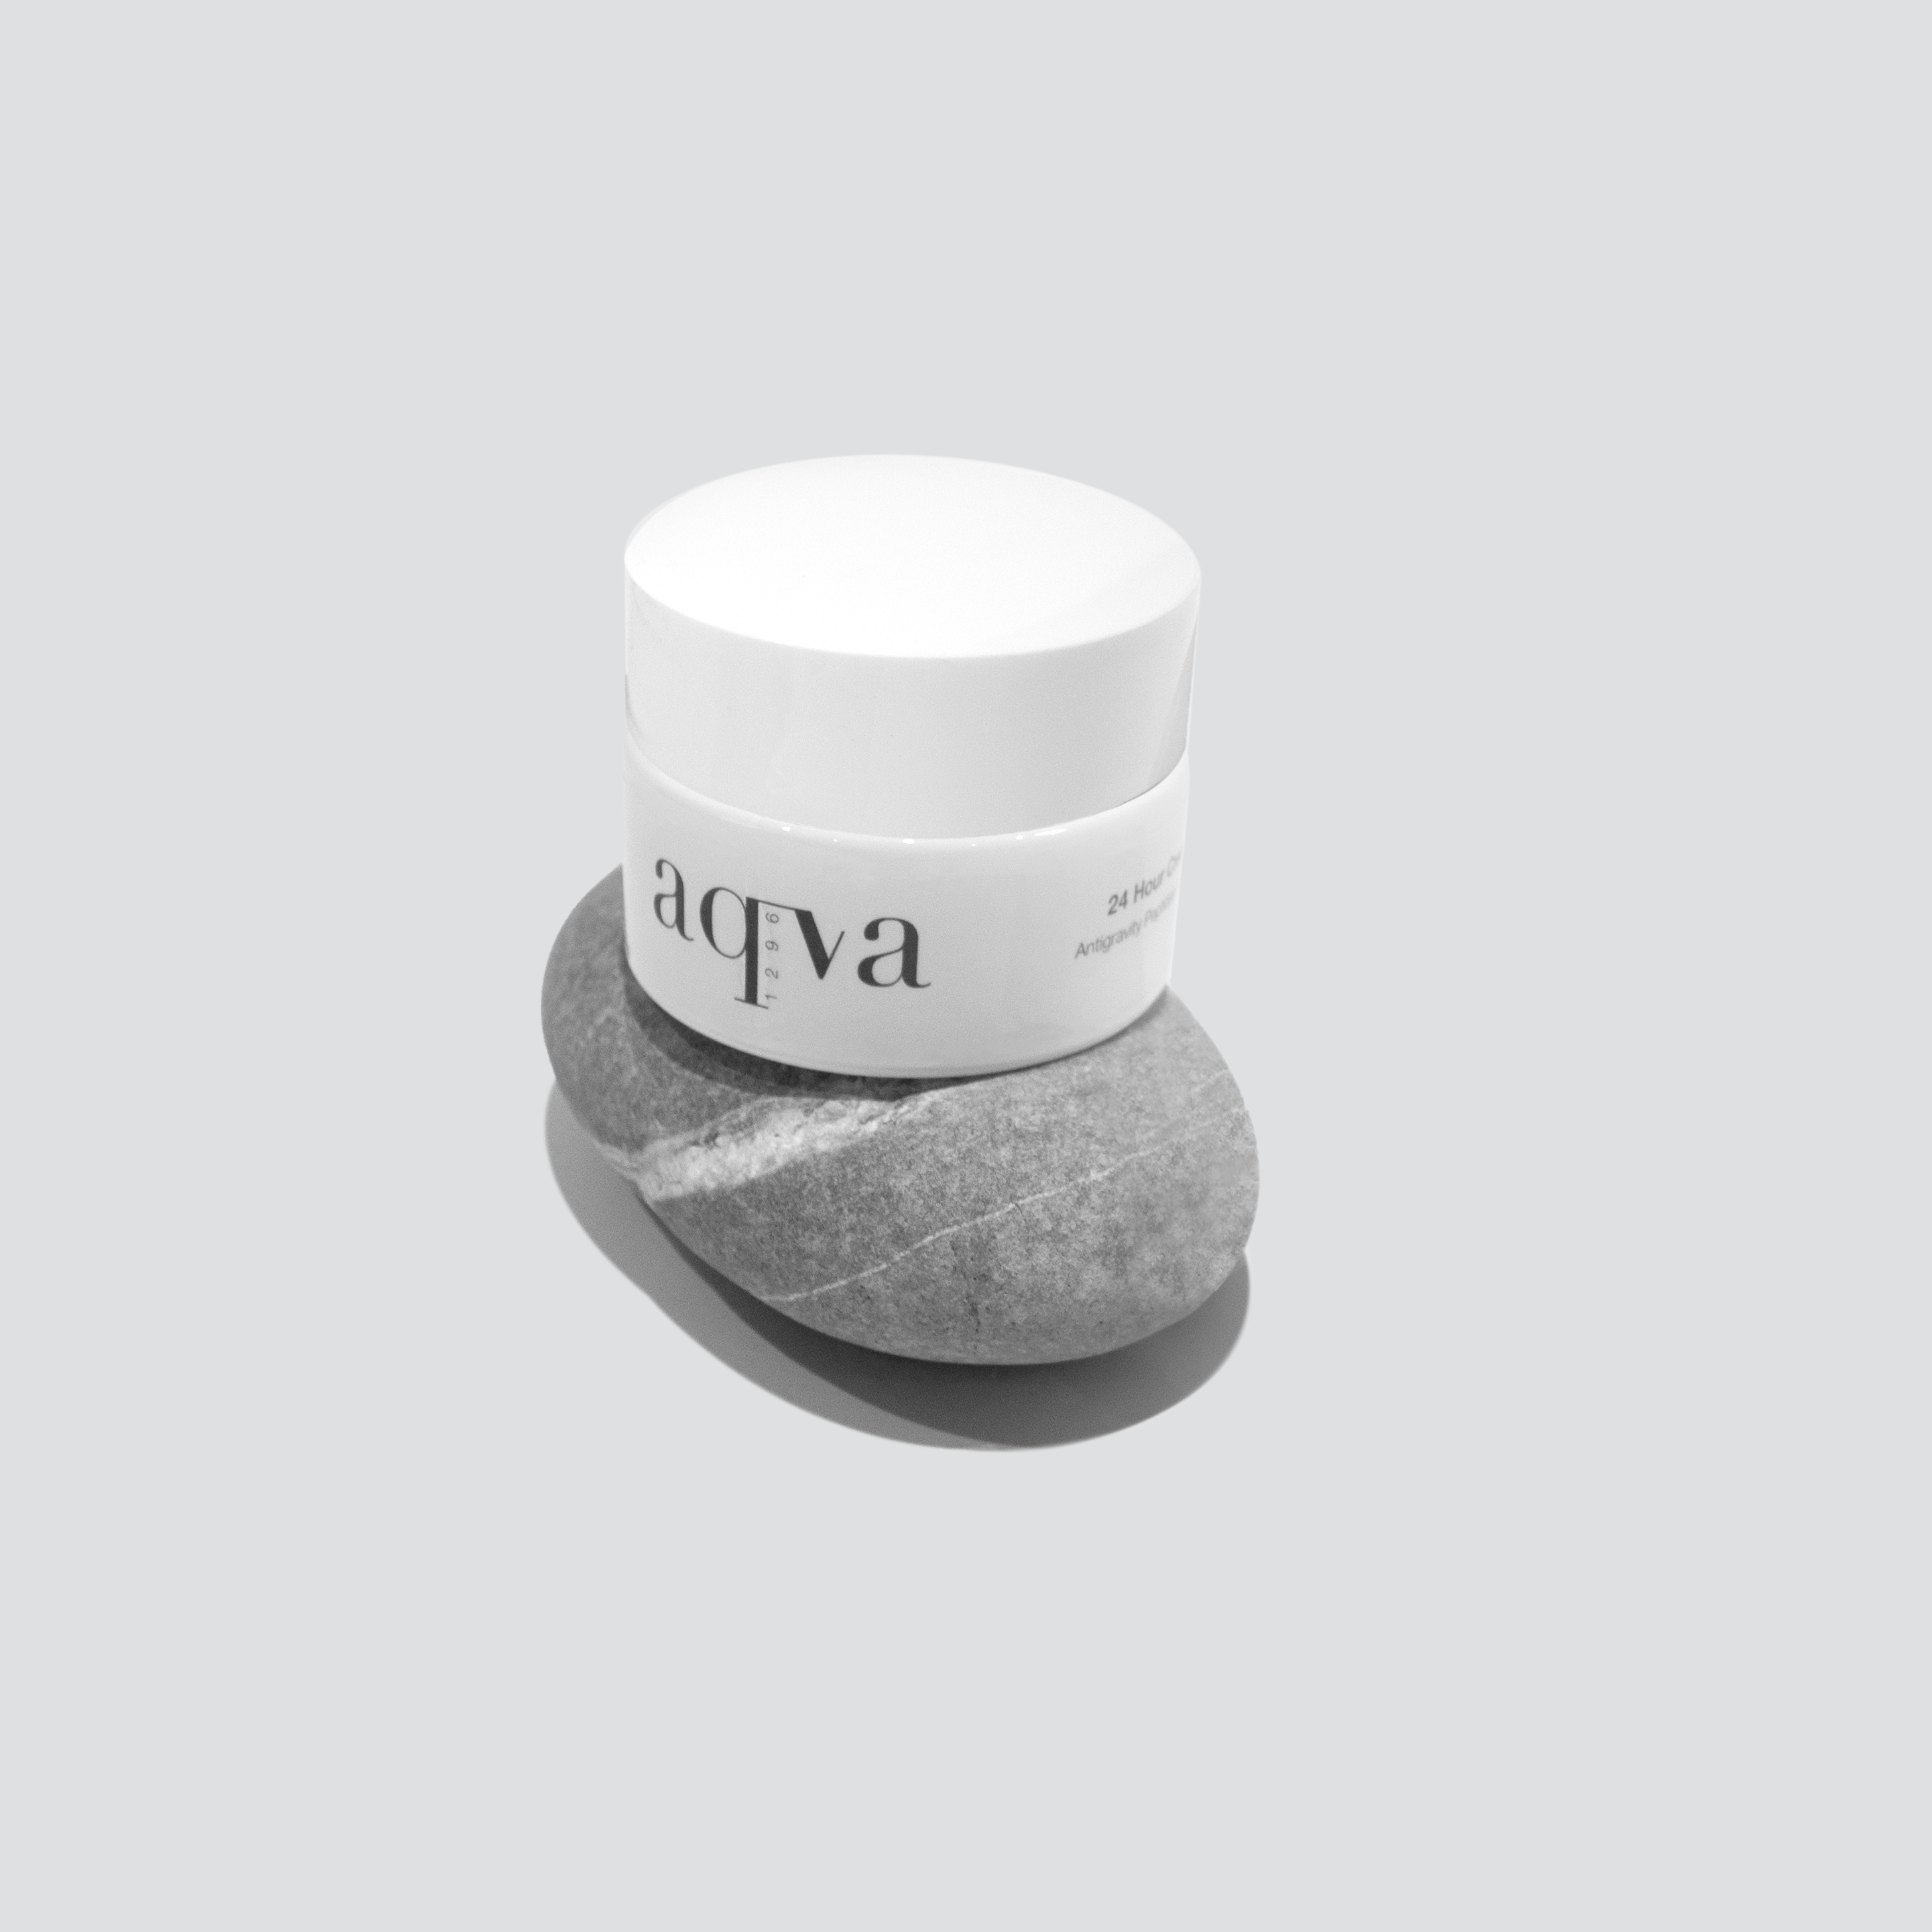 Aqva1296 - 24-Hour Cream - LaVit Collection